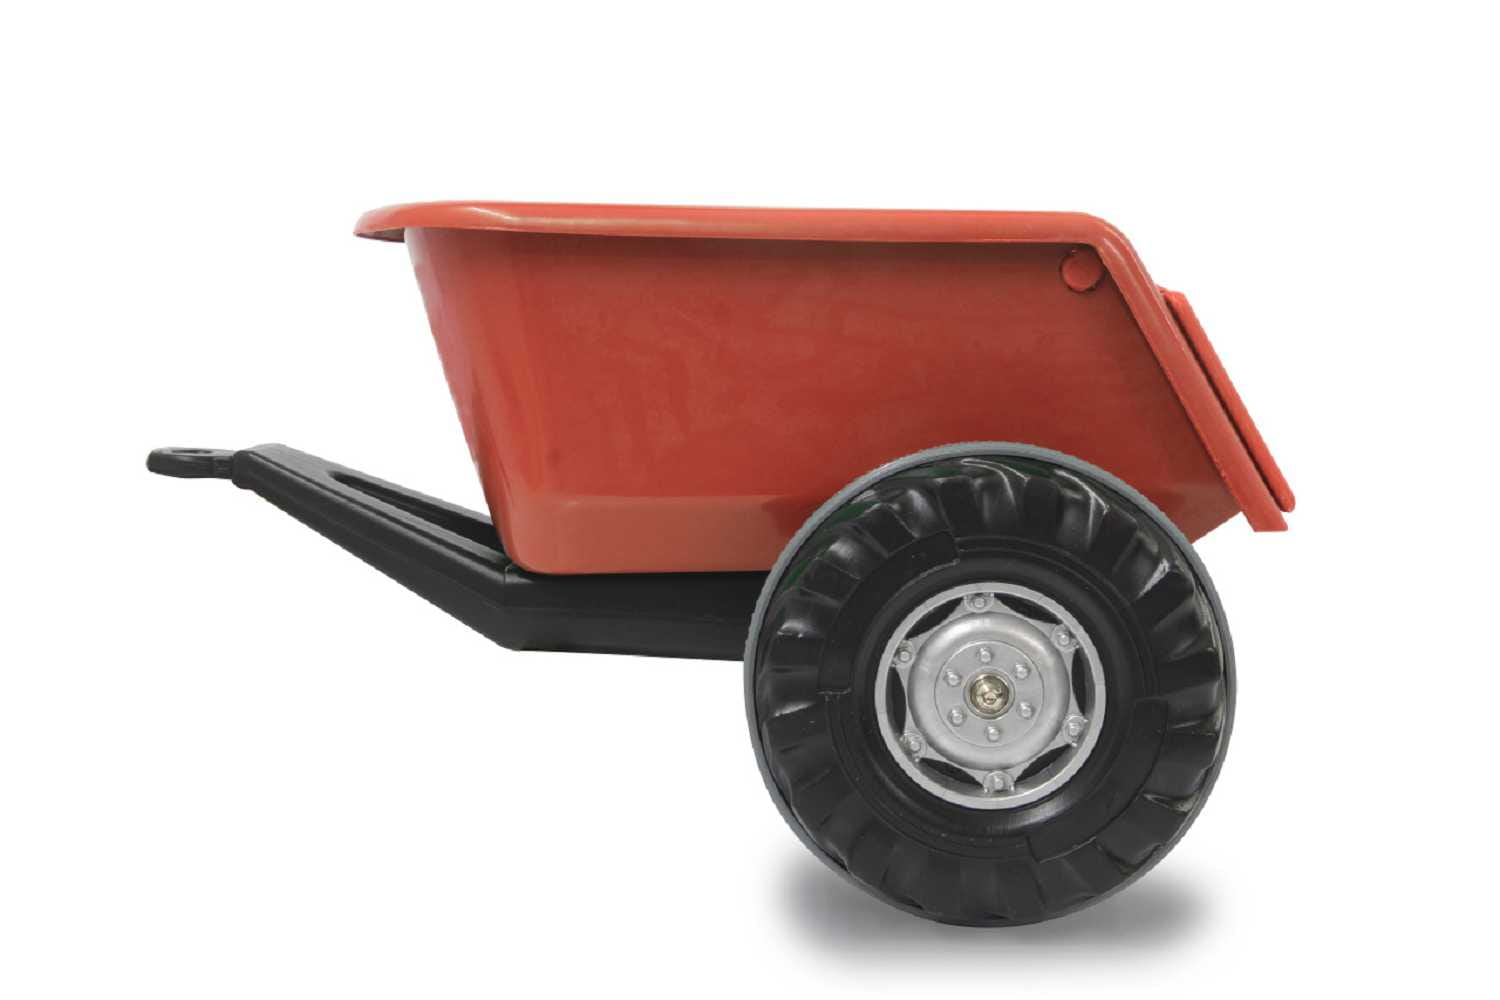 Jamara Anhänger Ride-on rot für Traktor Power Drag/Big Wheel